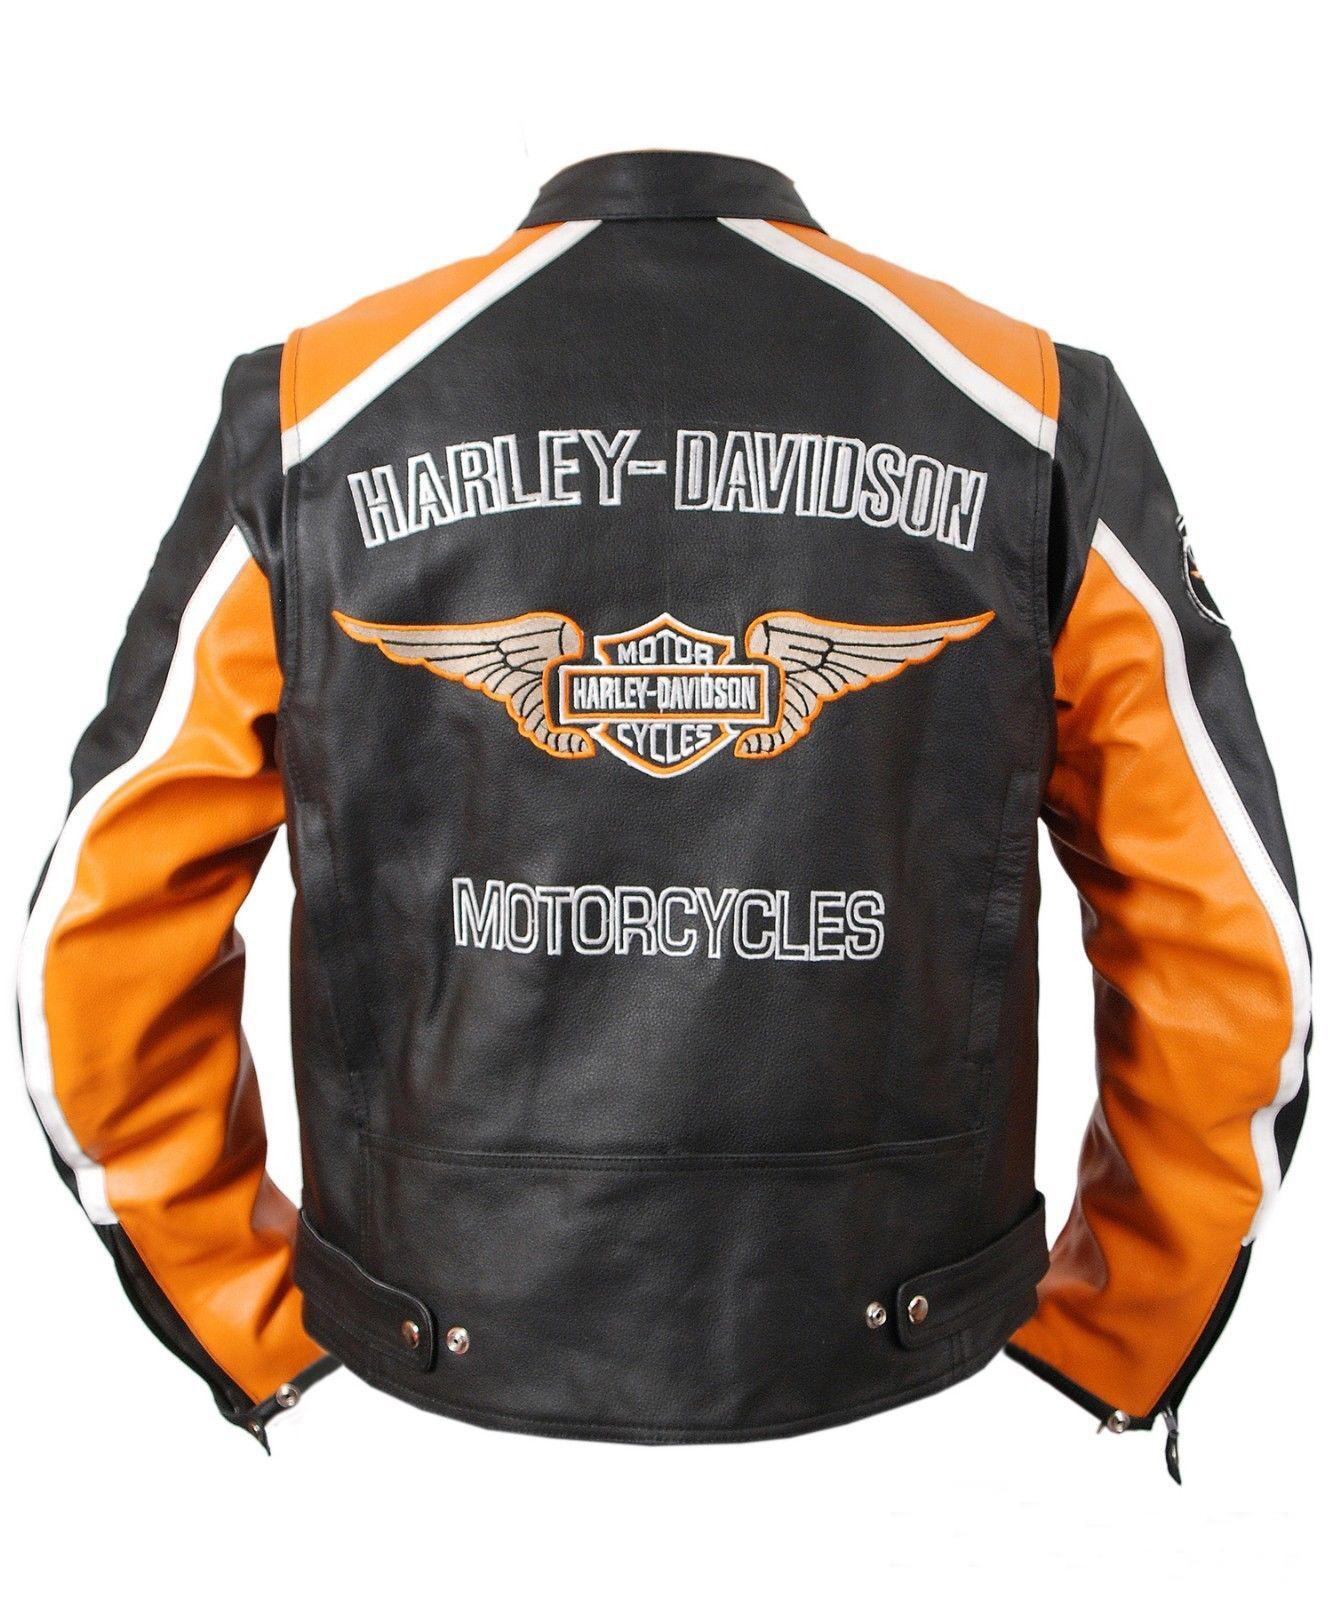 MEN'S HARLEY DAVIDSON MOTORCYCLE CLASSIC CRUISER JACKET | Leather